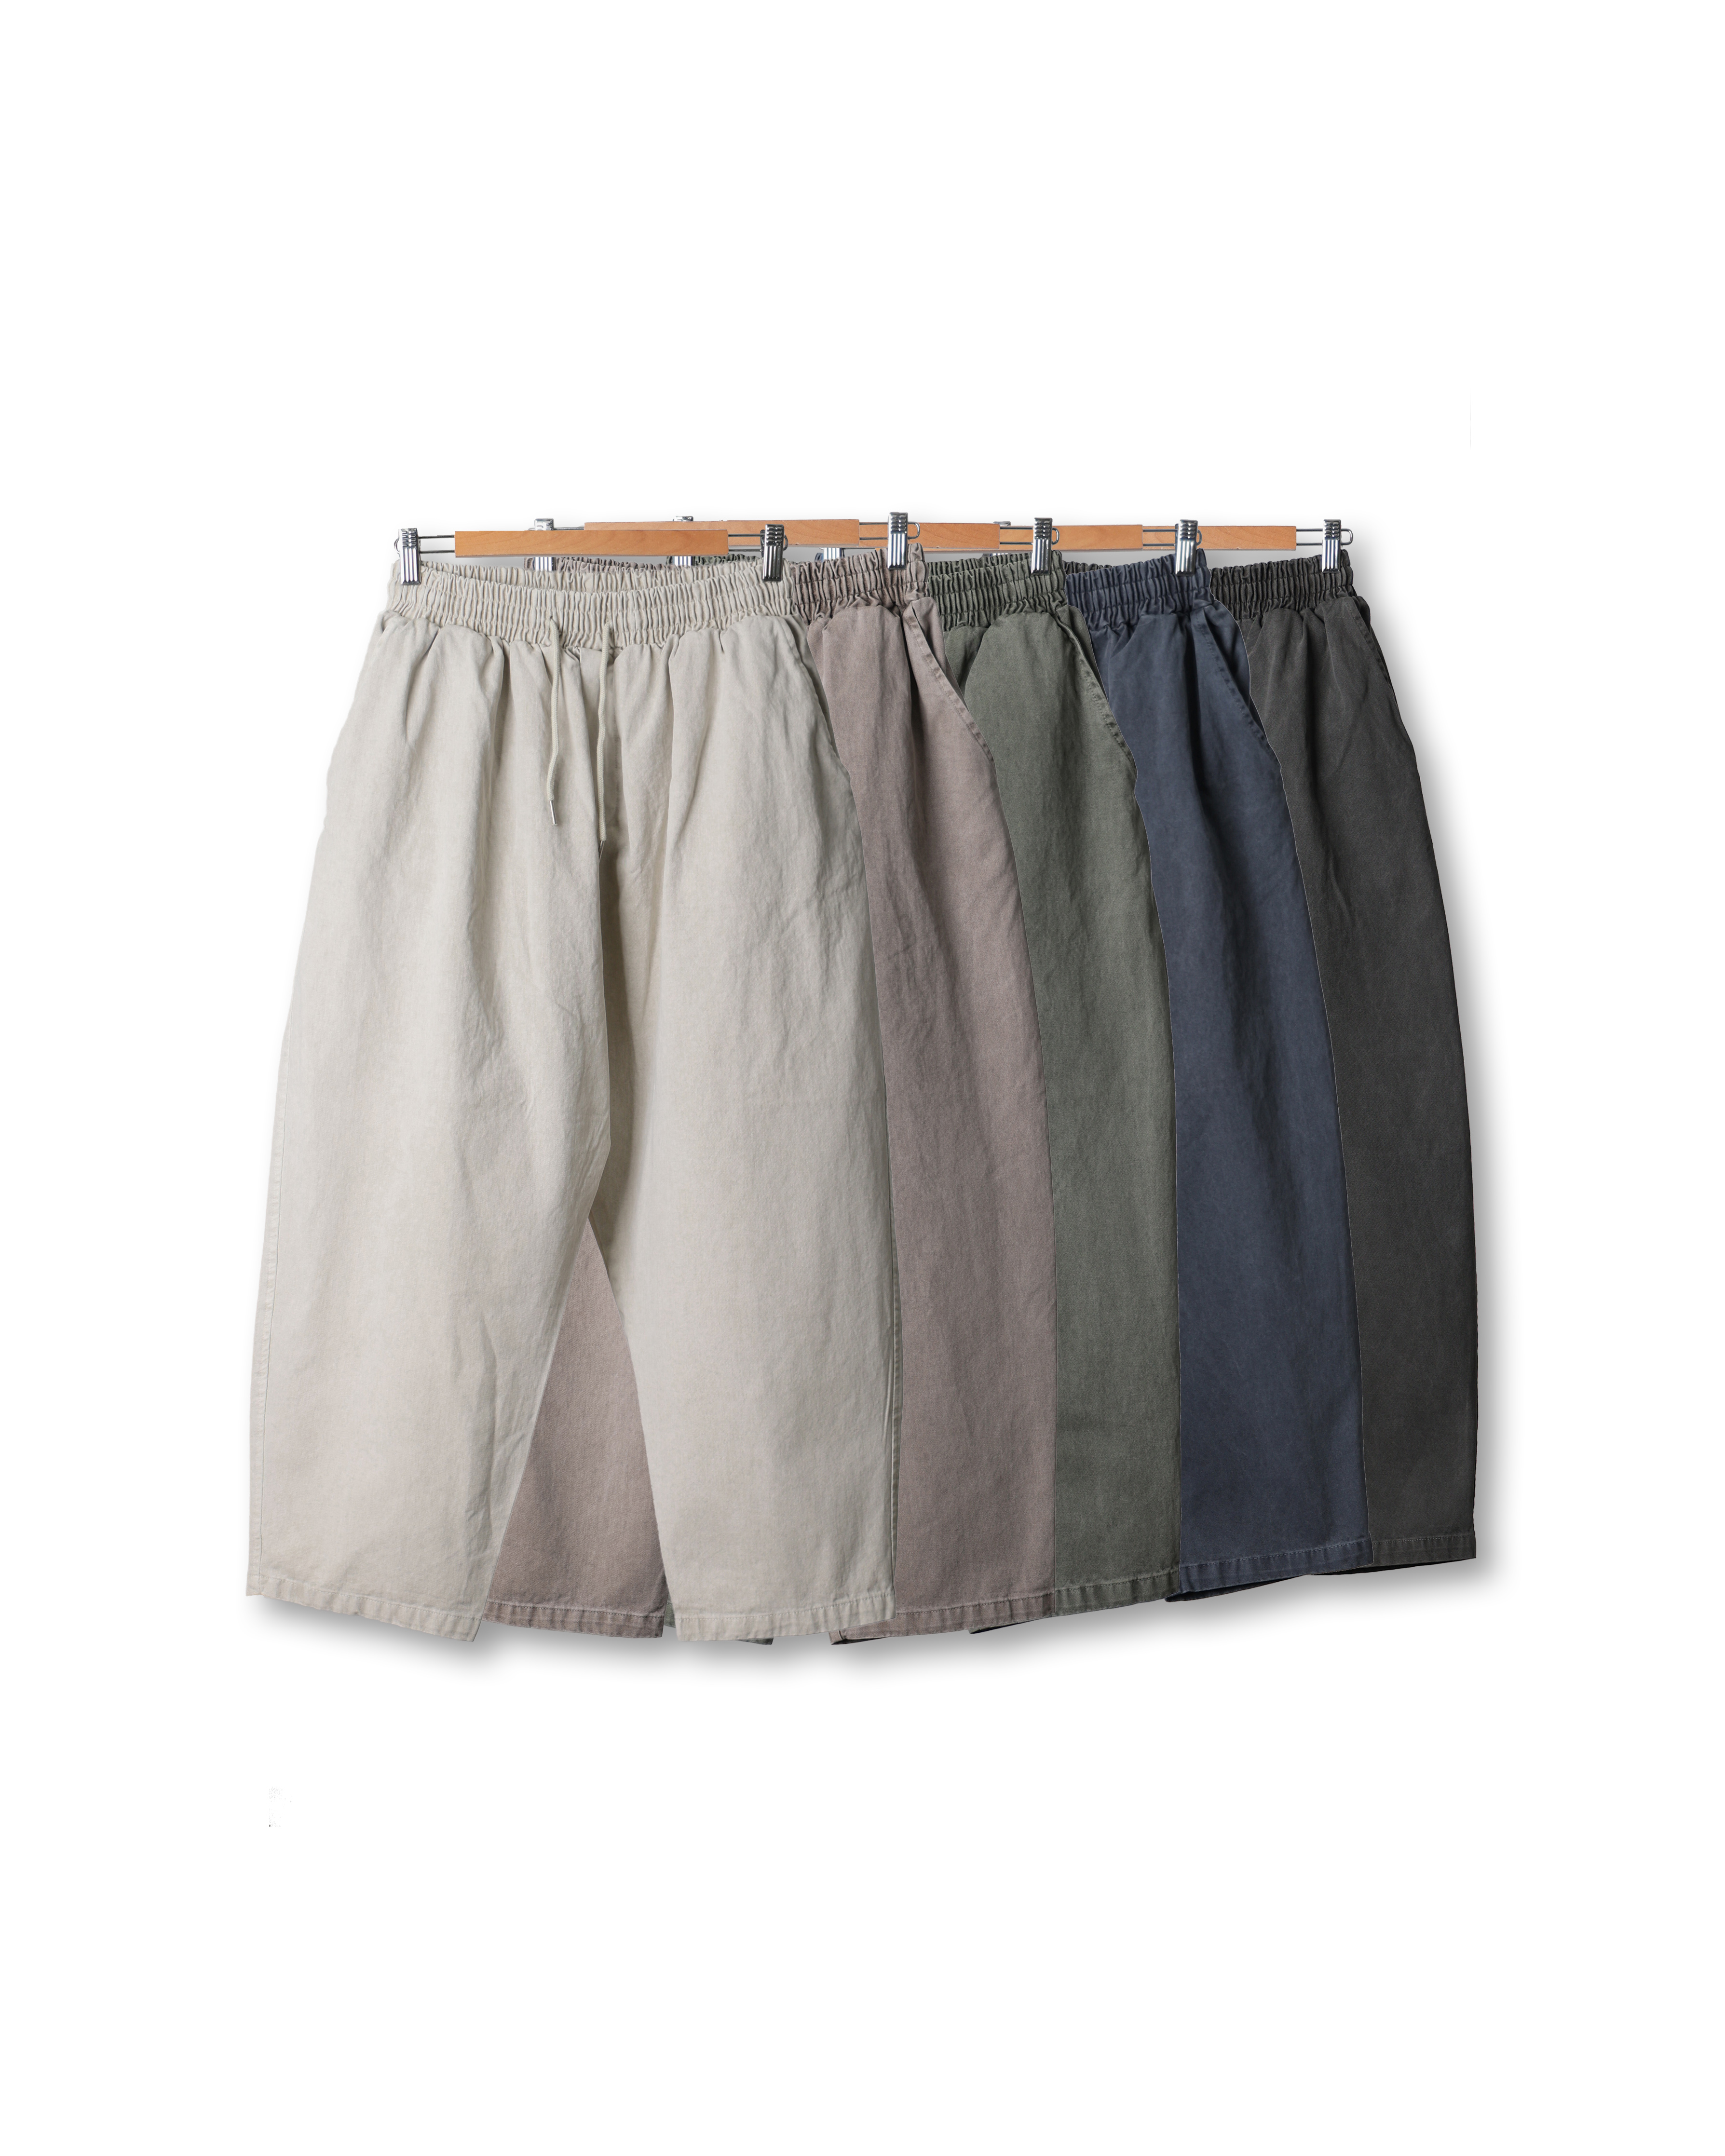 RARA Pigments Crop Loose Balloon Pants (Charcoal/Navy/Olive/Beige/Ivory)